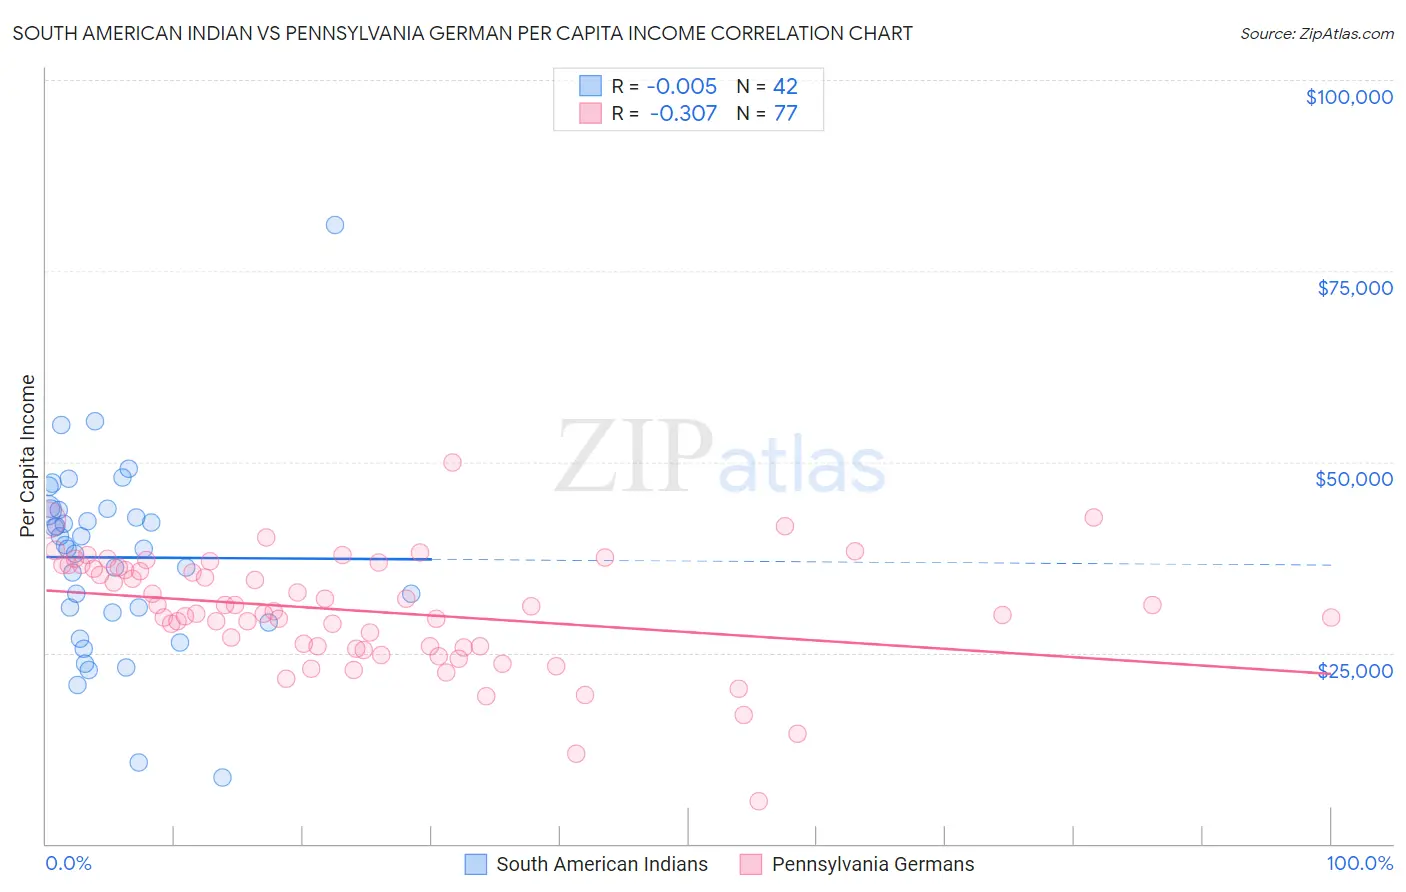 South American Indian vs Pennsylvania German Per Capita Income